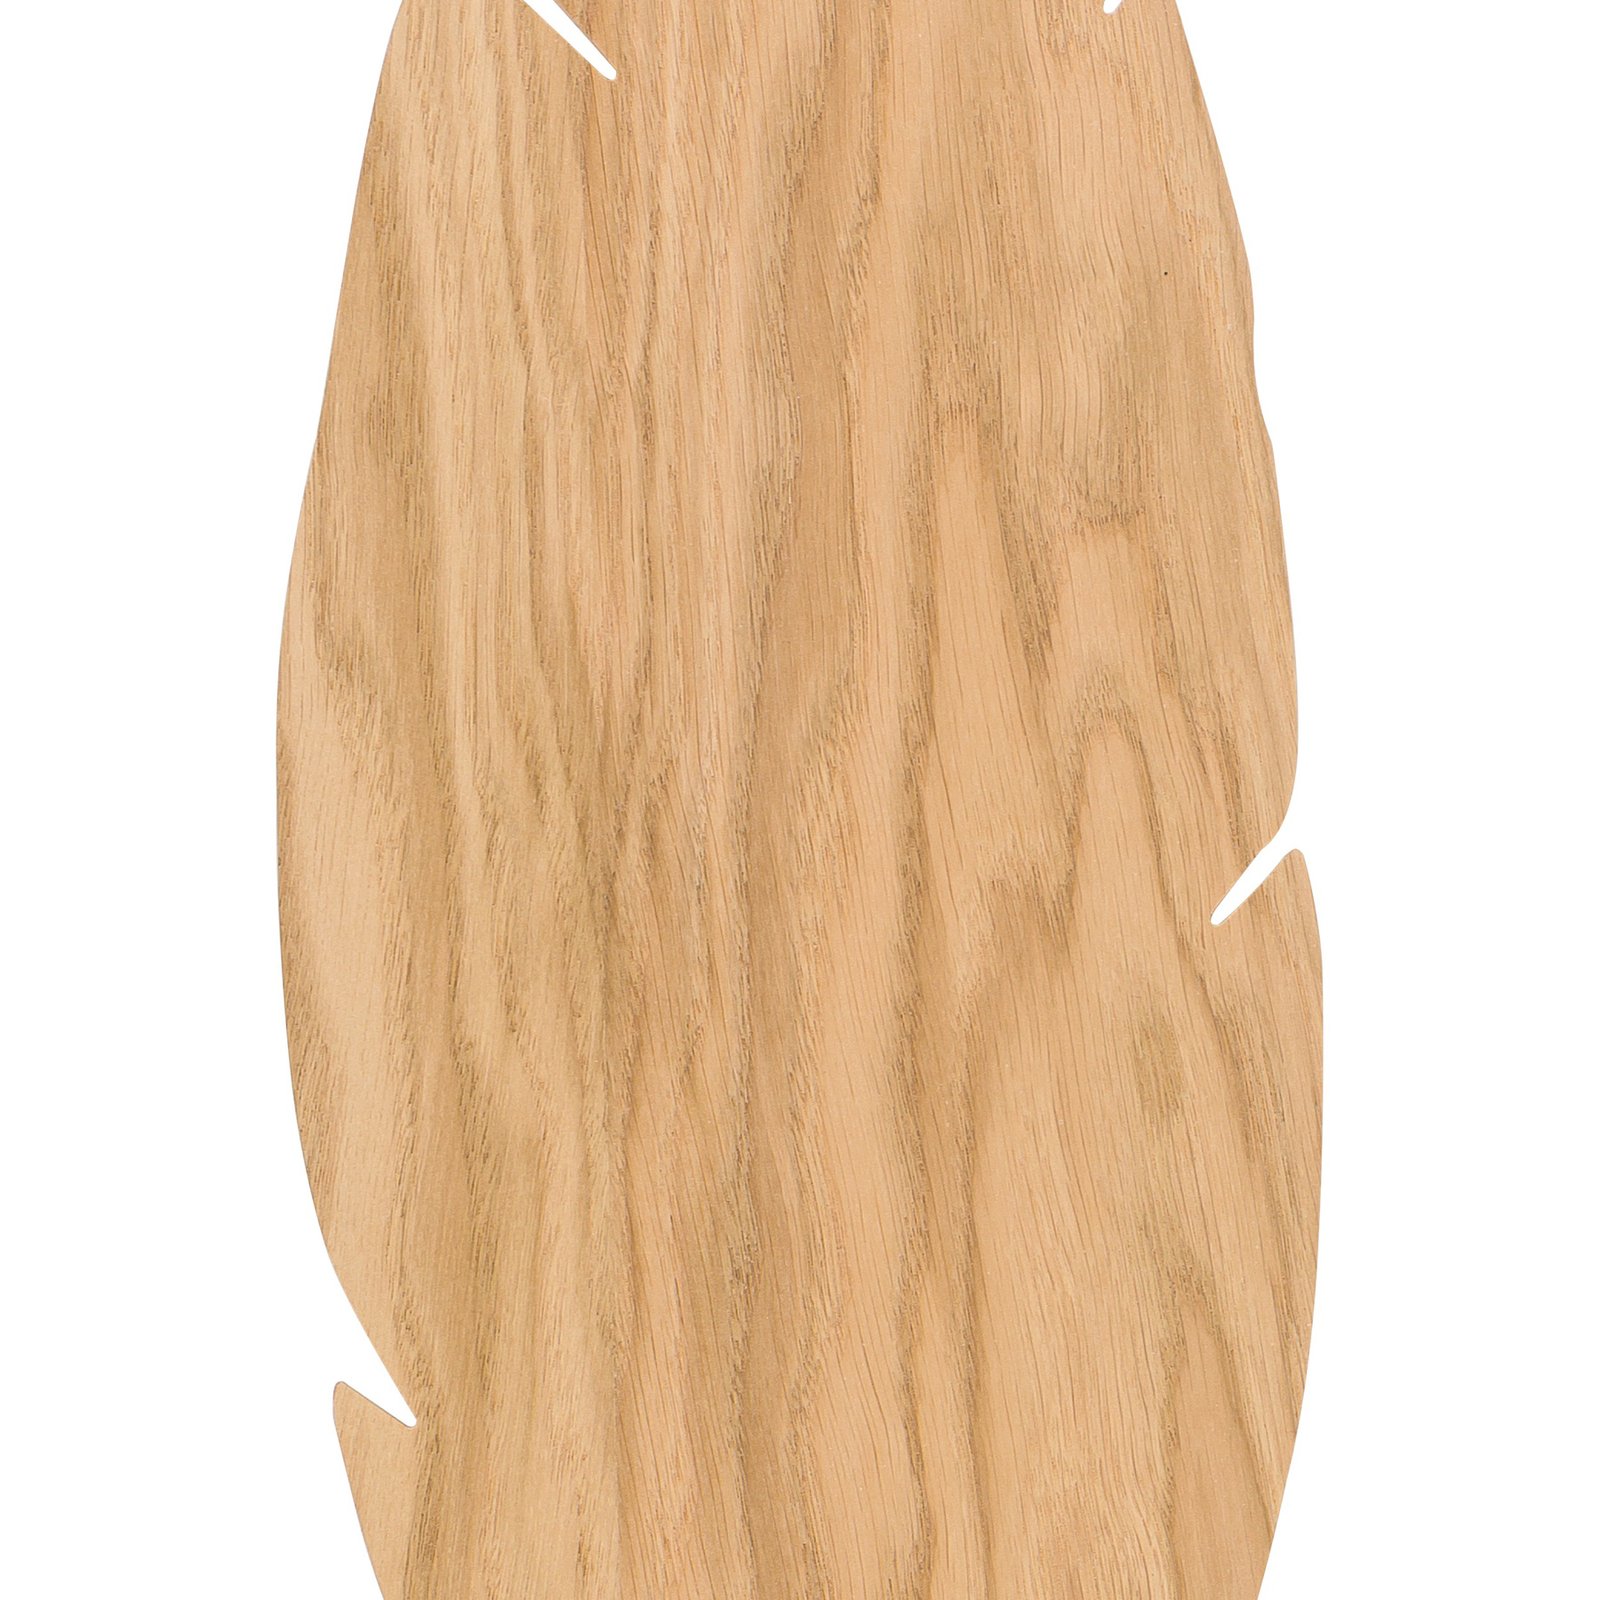 Envostar wandlamp Lehti, bladvorm, licht hout, 51 x 18 cm